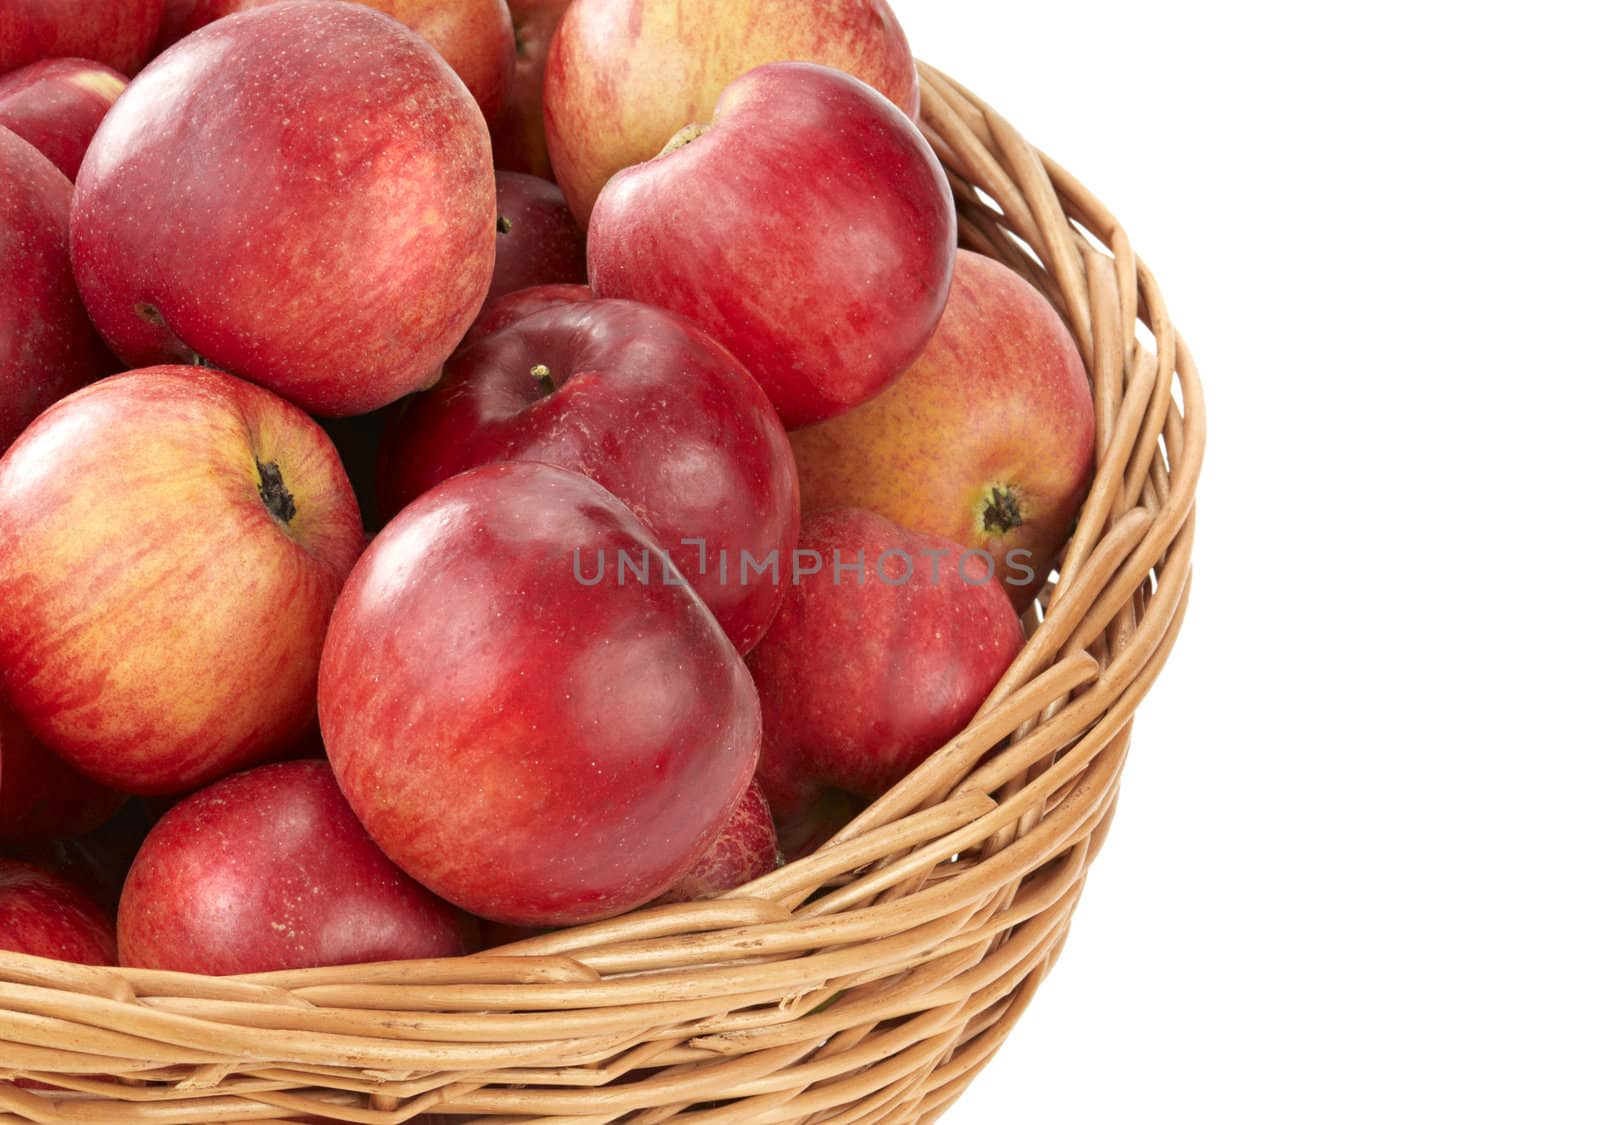 Basket with apples by Kamensky